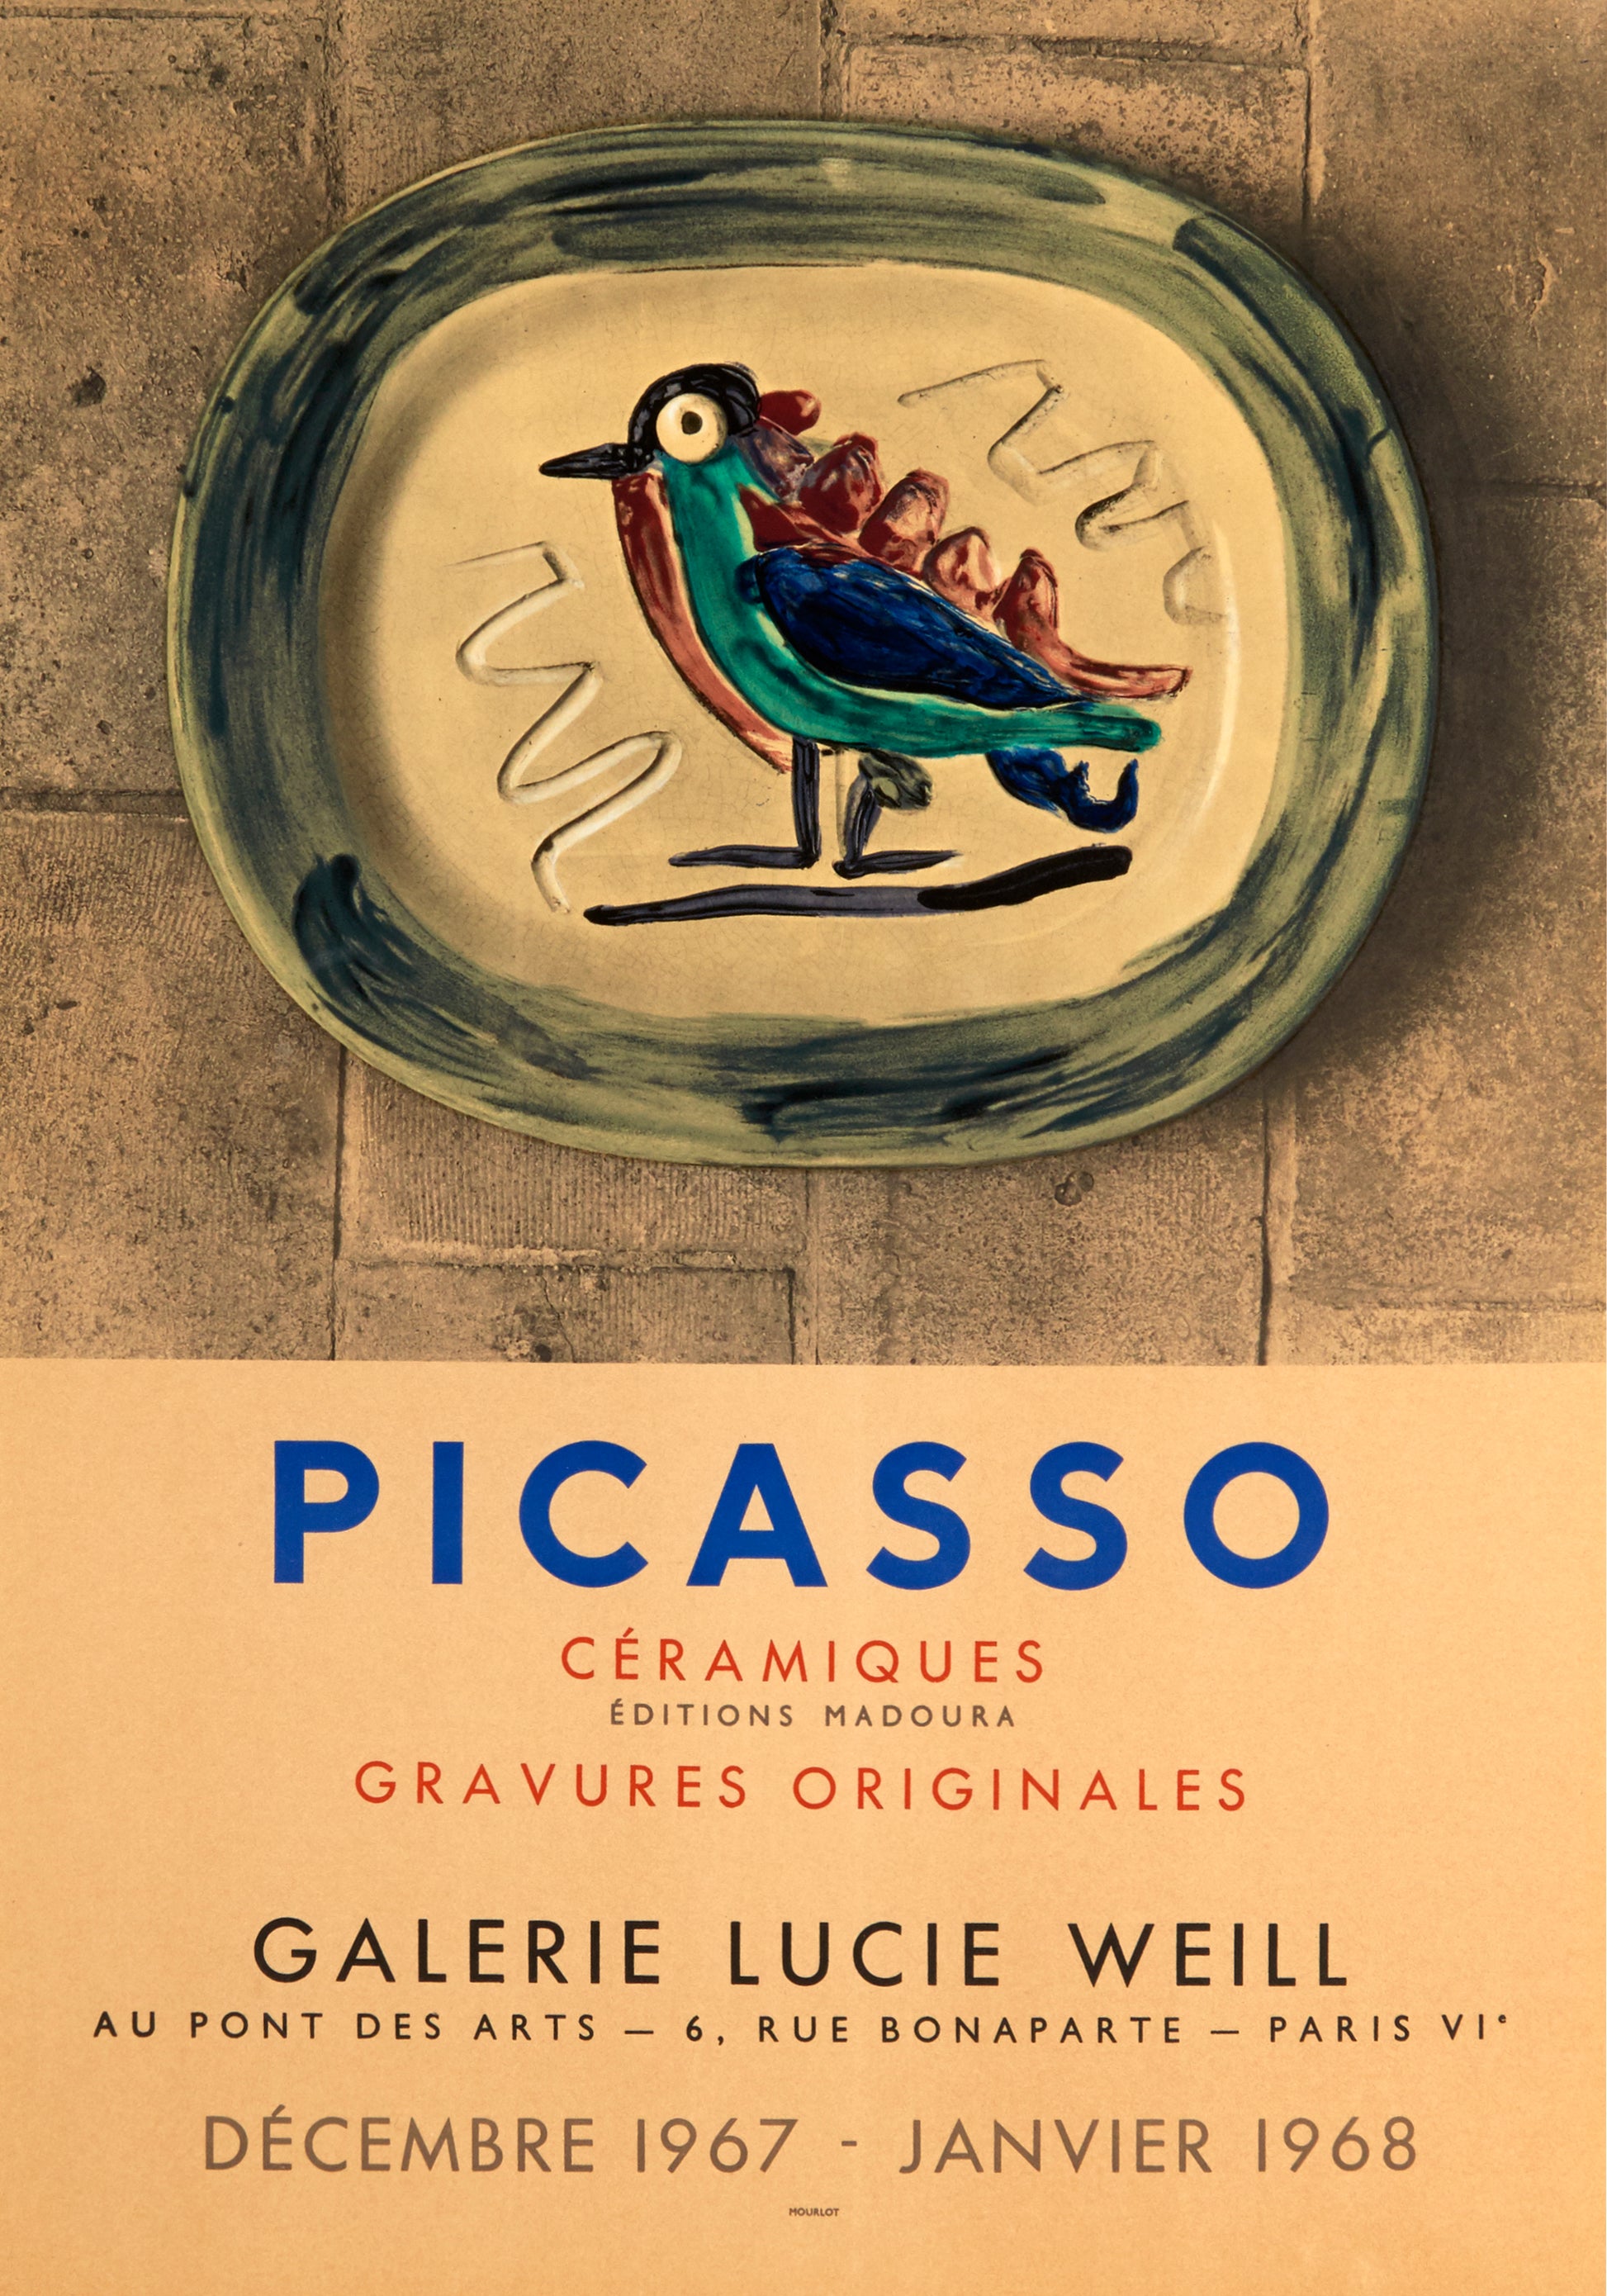 Picasso Ceramiques - Galerie Lucie Weill (after) Pablo Picasso, 1967 - Mourlot Editions - Fine_Art - Poster - Lithograph - Wall Art - Vintage - Prints - Original